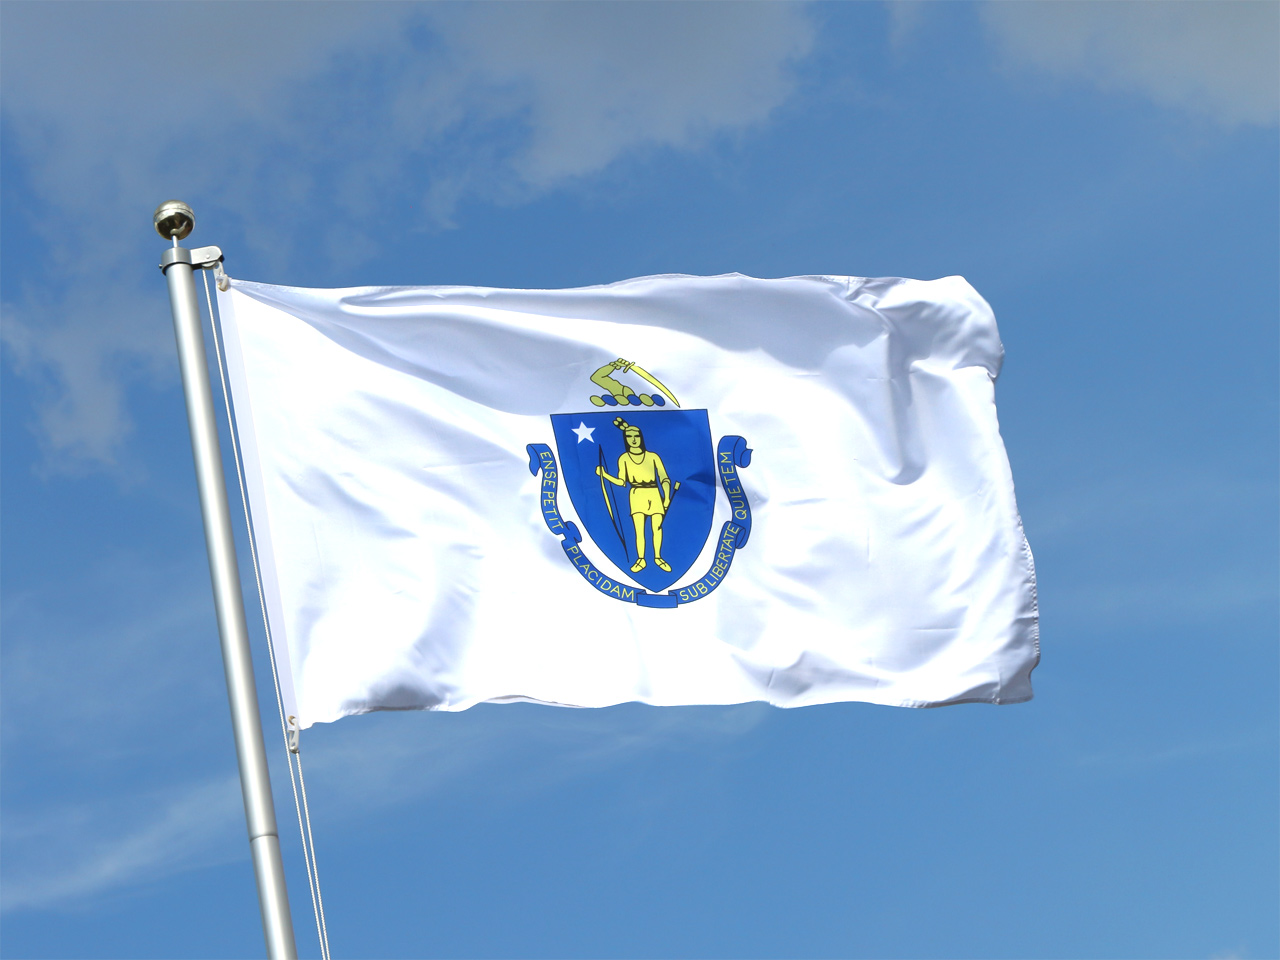 Massachusetts USA Flagge Fahne Hißflagge Hißfahne 150 x 90 cm 